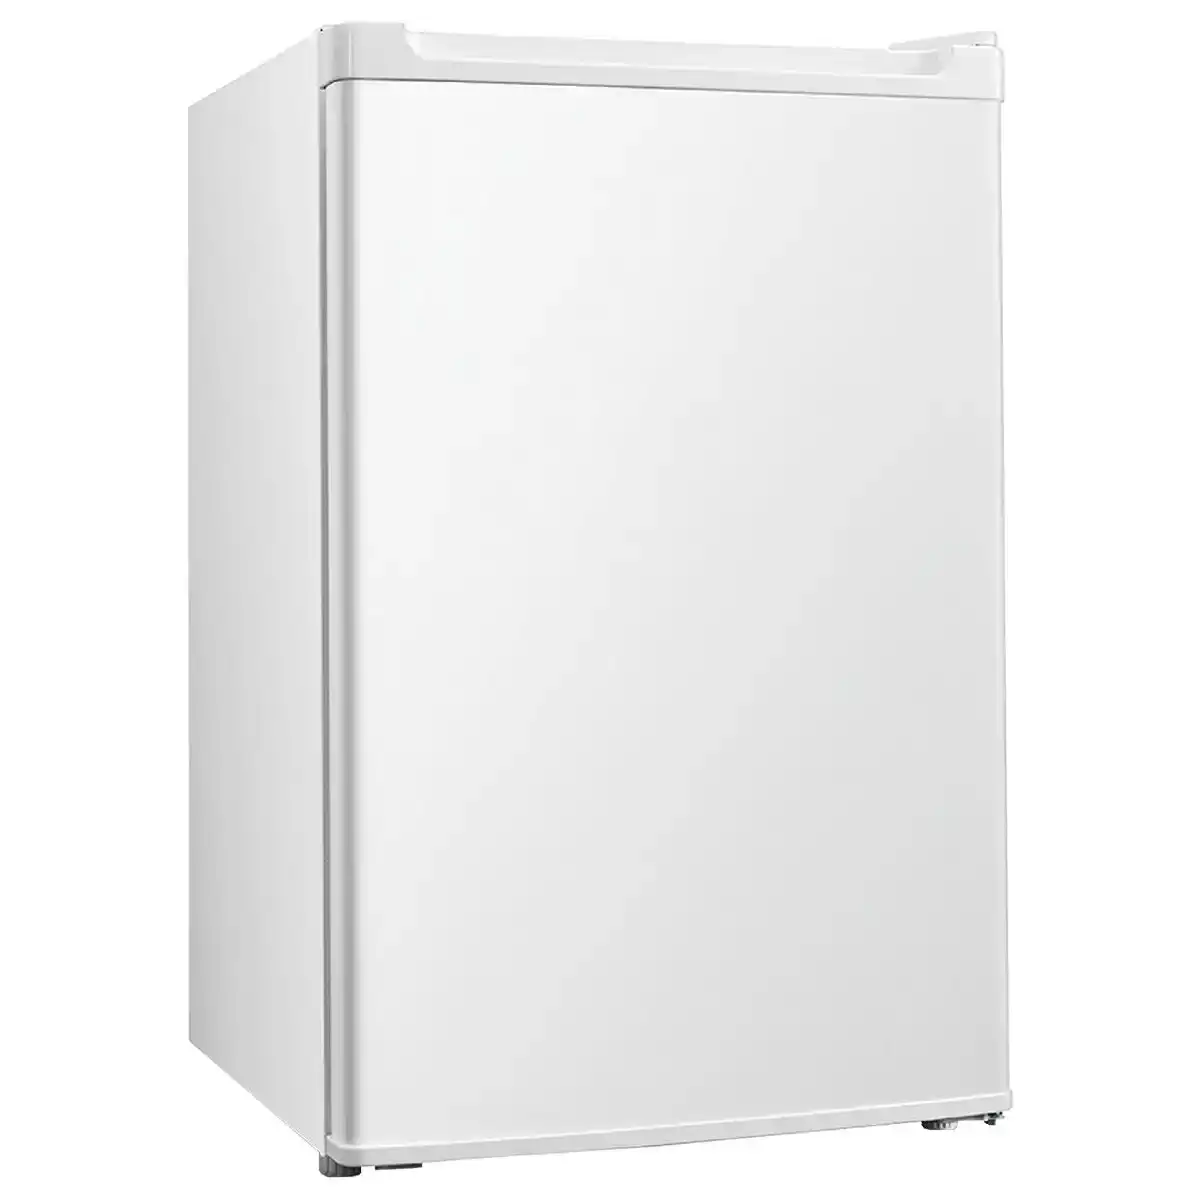 Eurotech 64L Bar Freezer